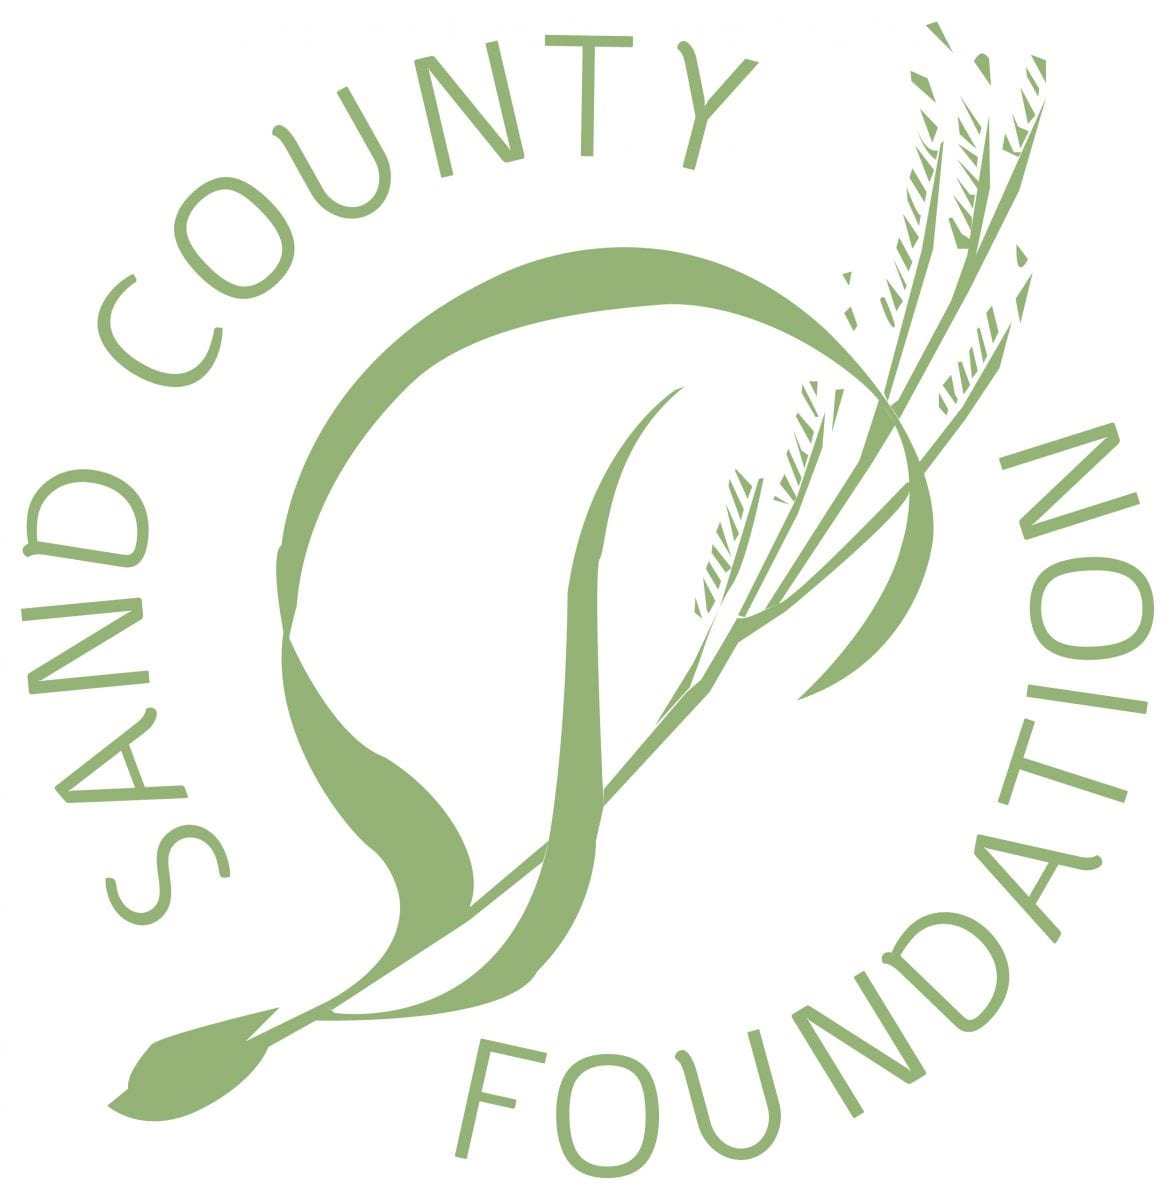 Sound County Foundation